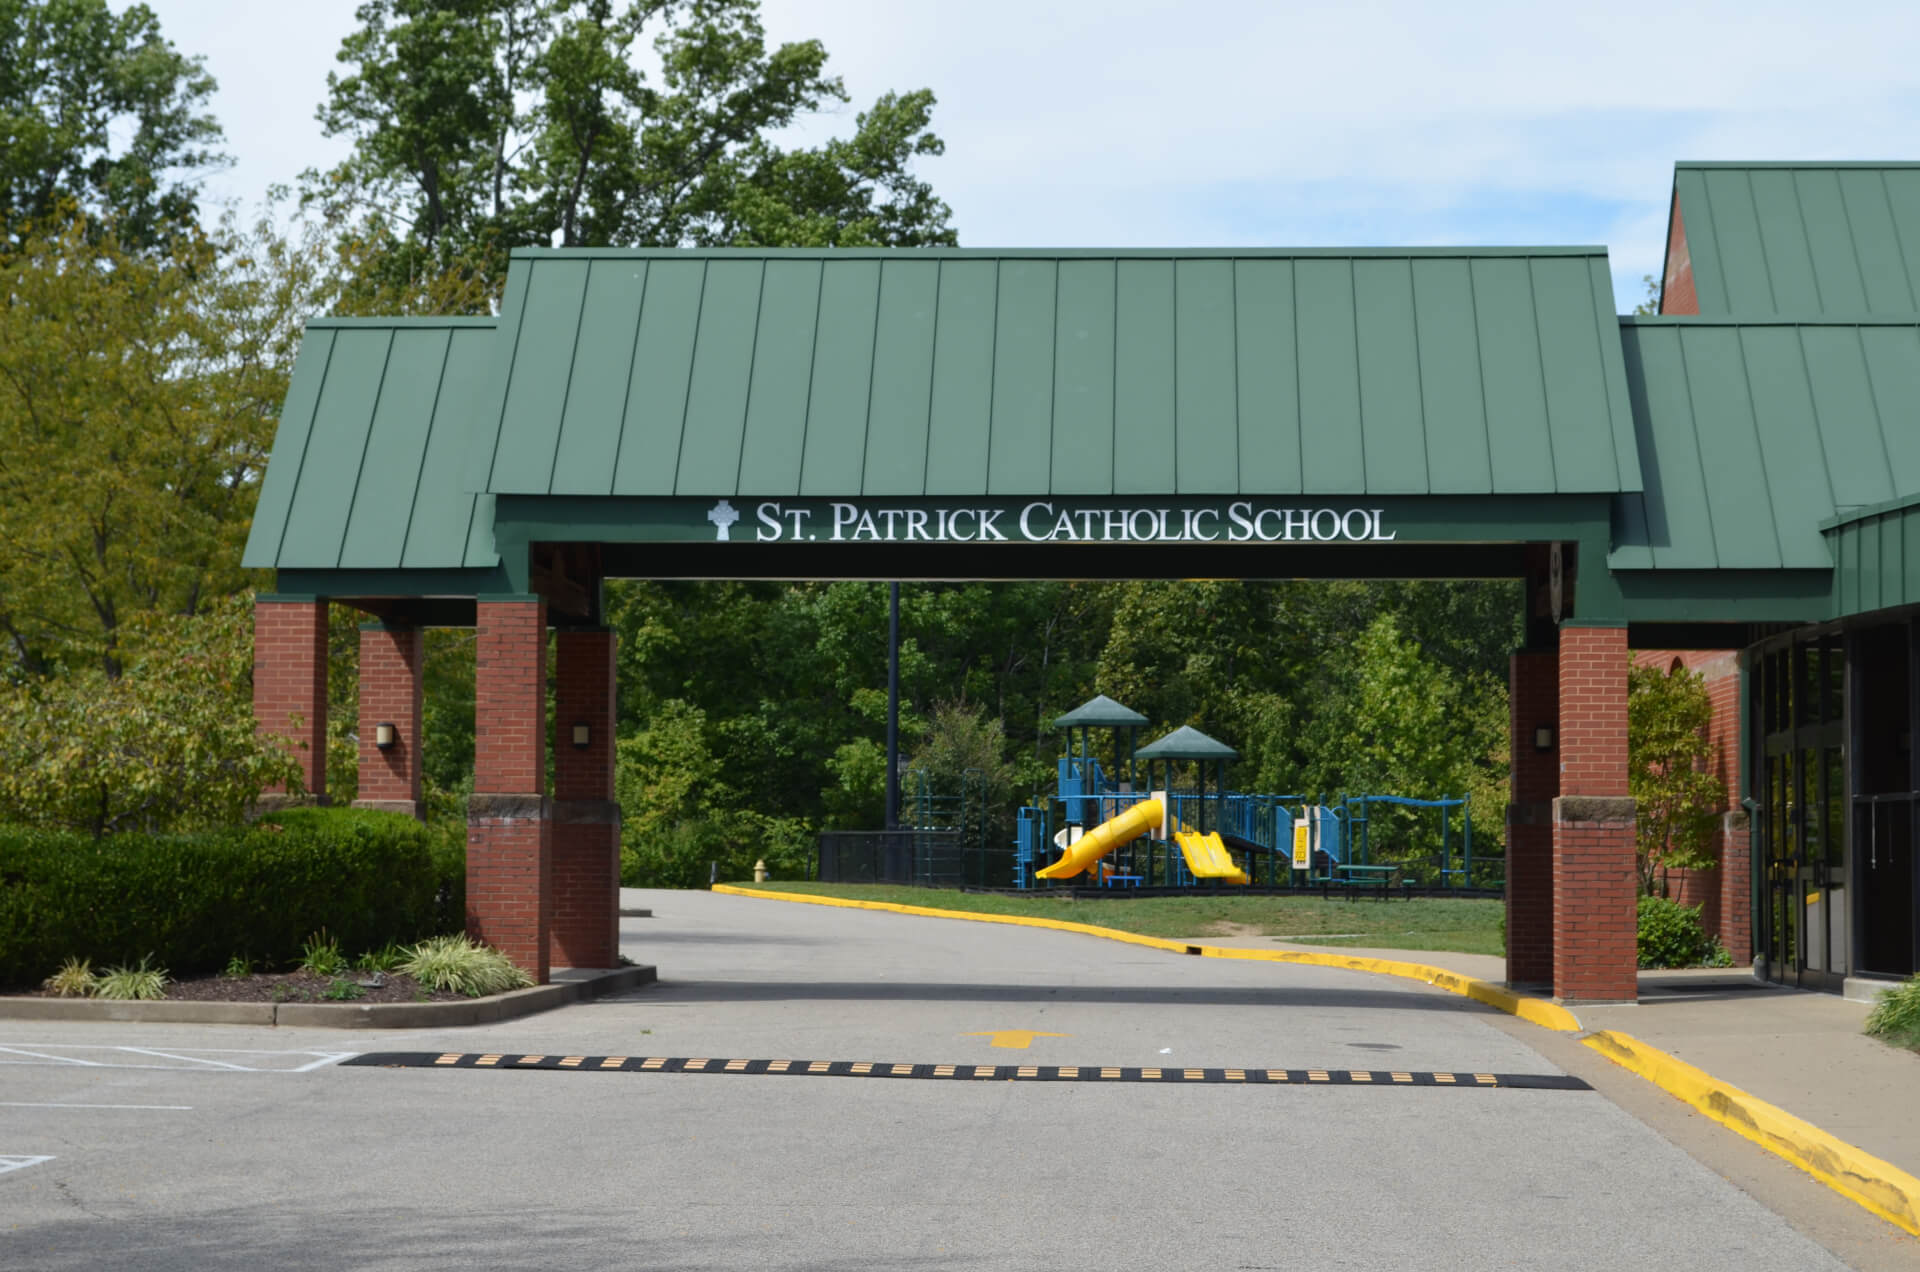 St. Patrick's School – St. Patrick's School